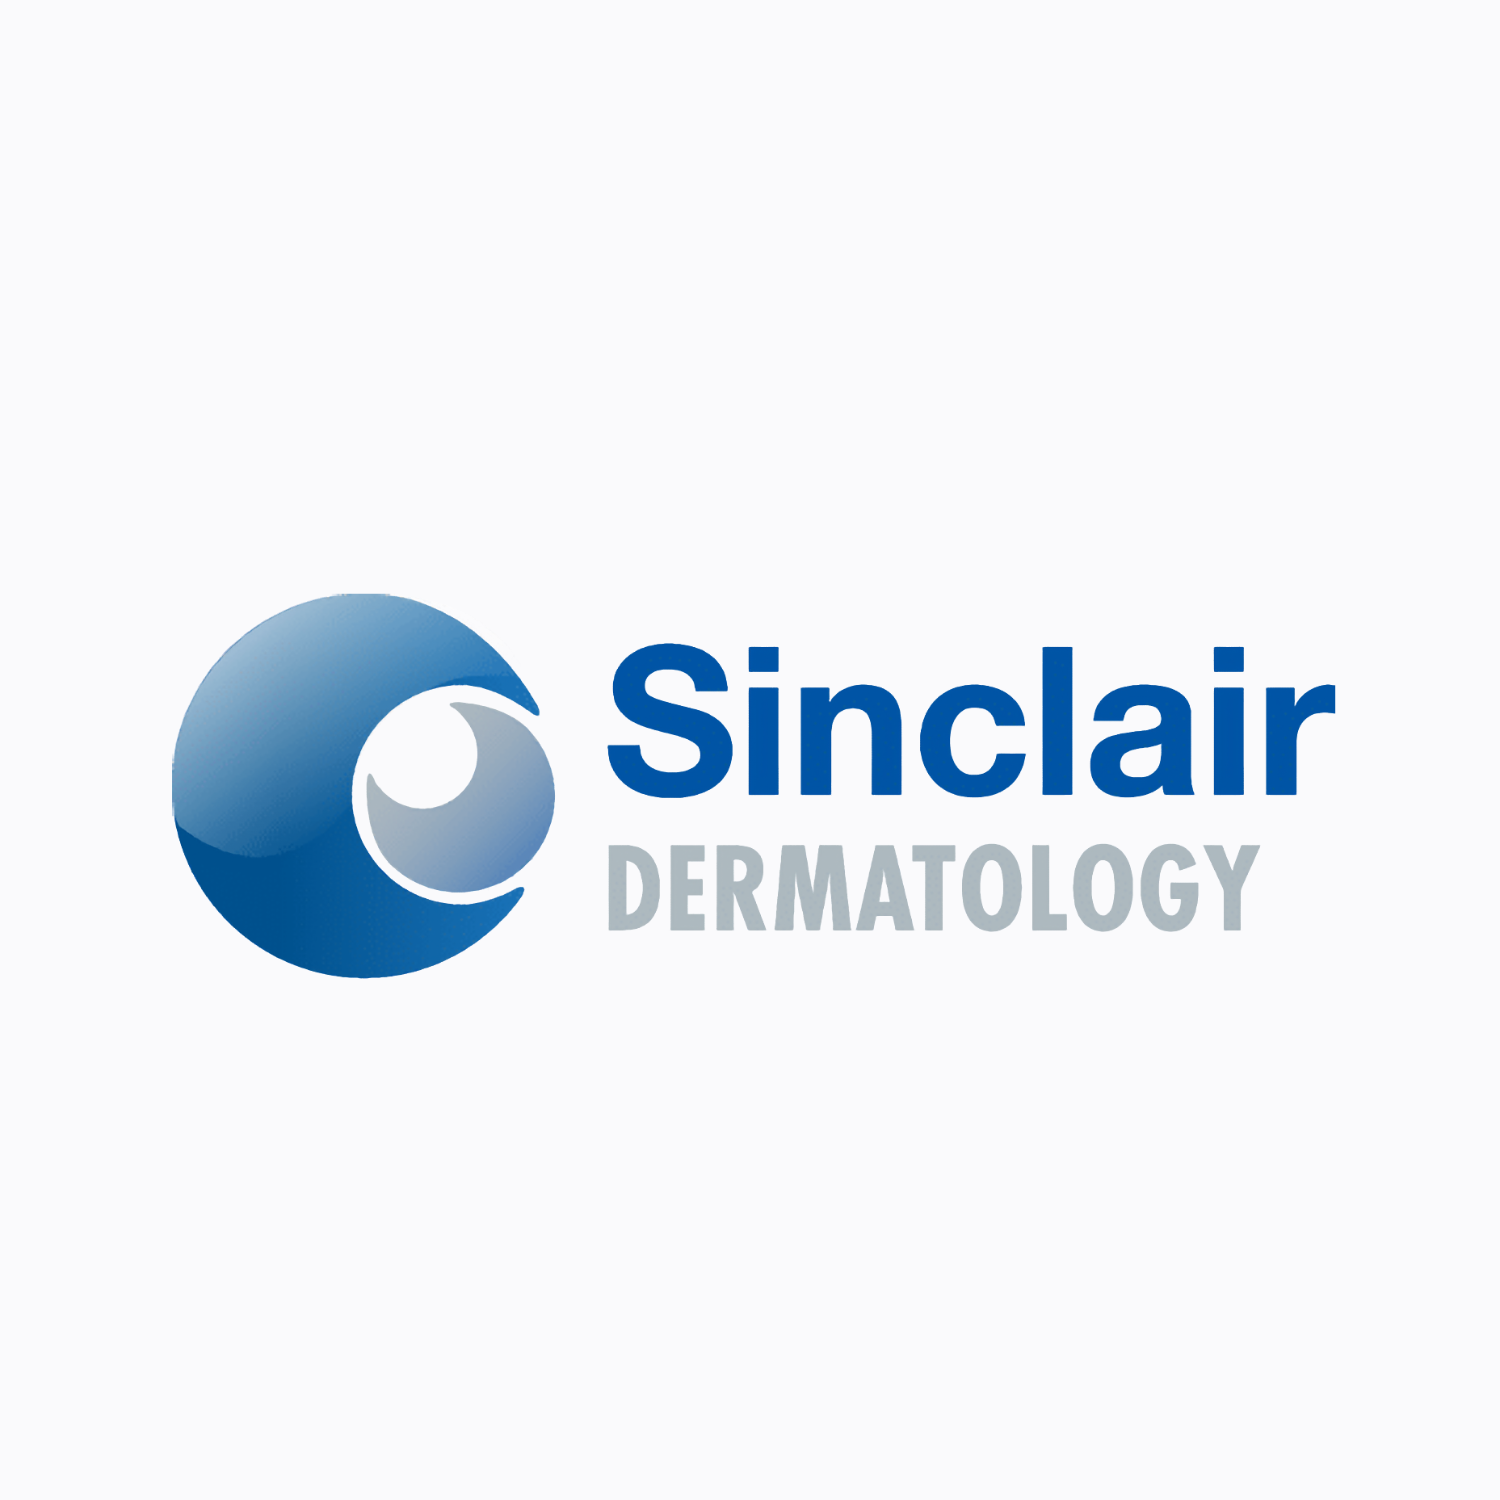 Sinclair Dermatology